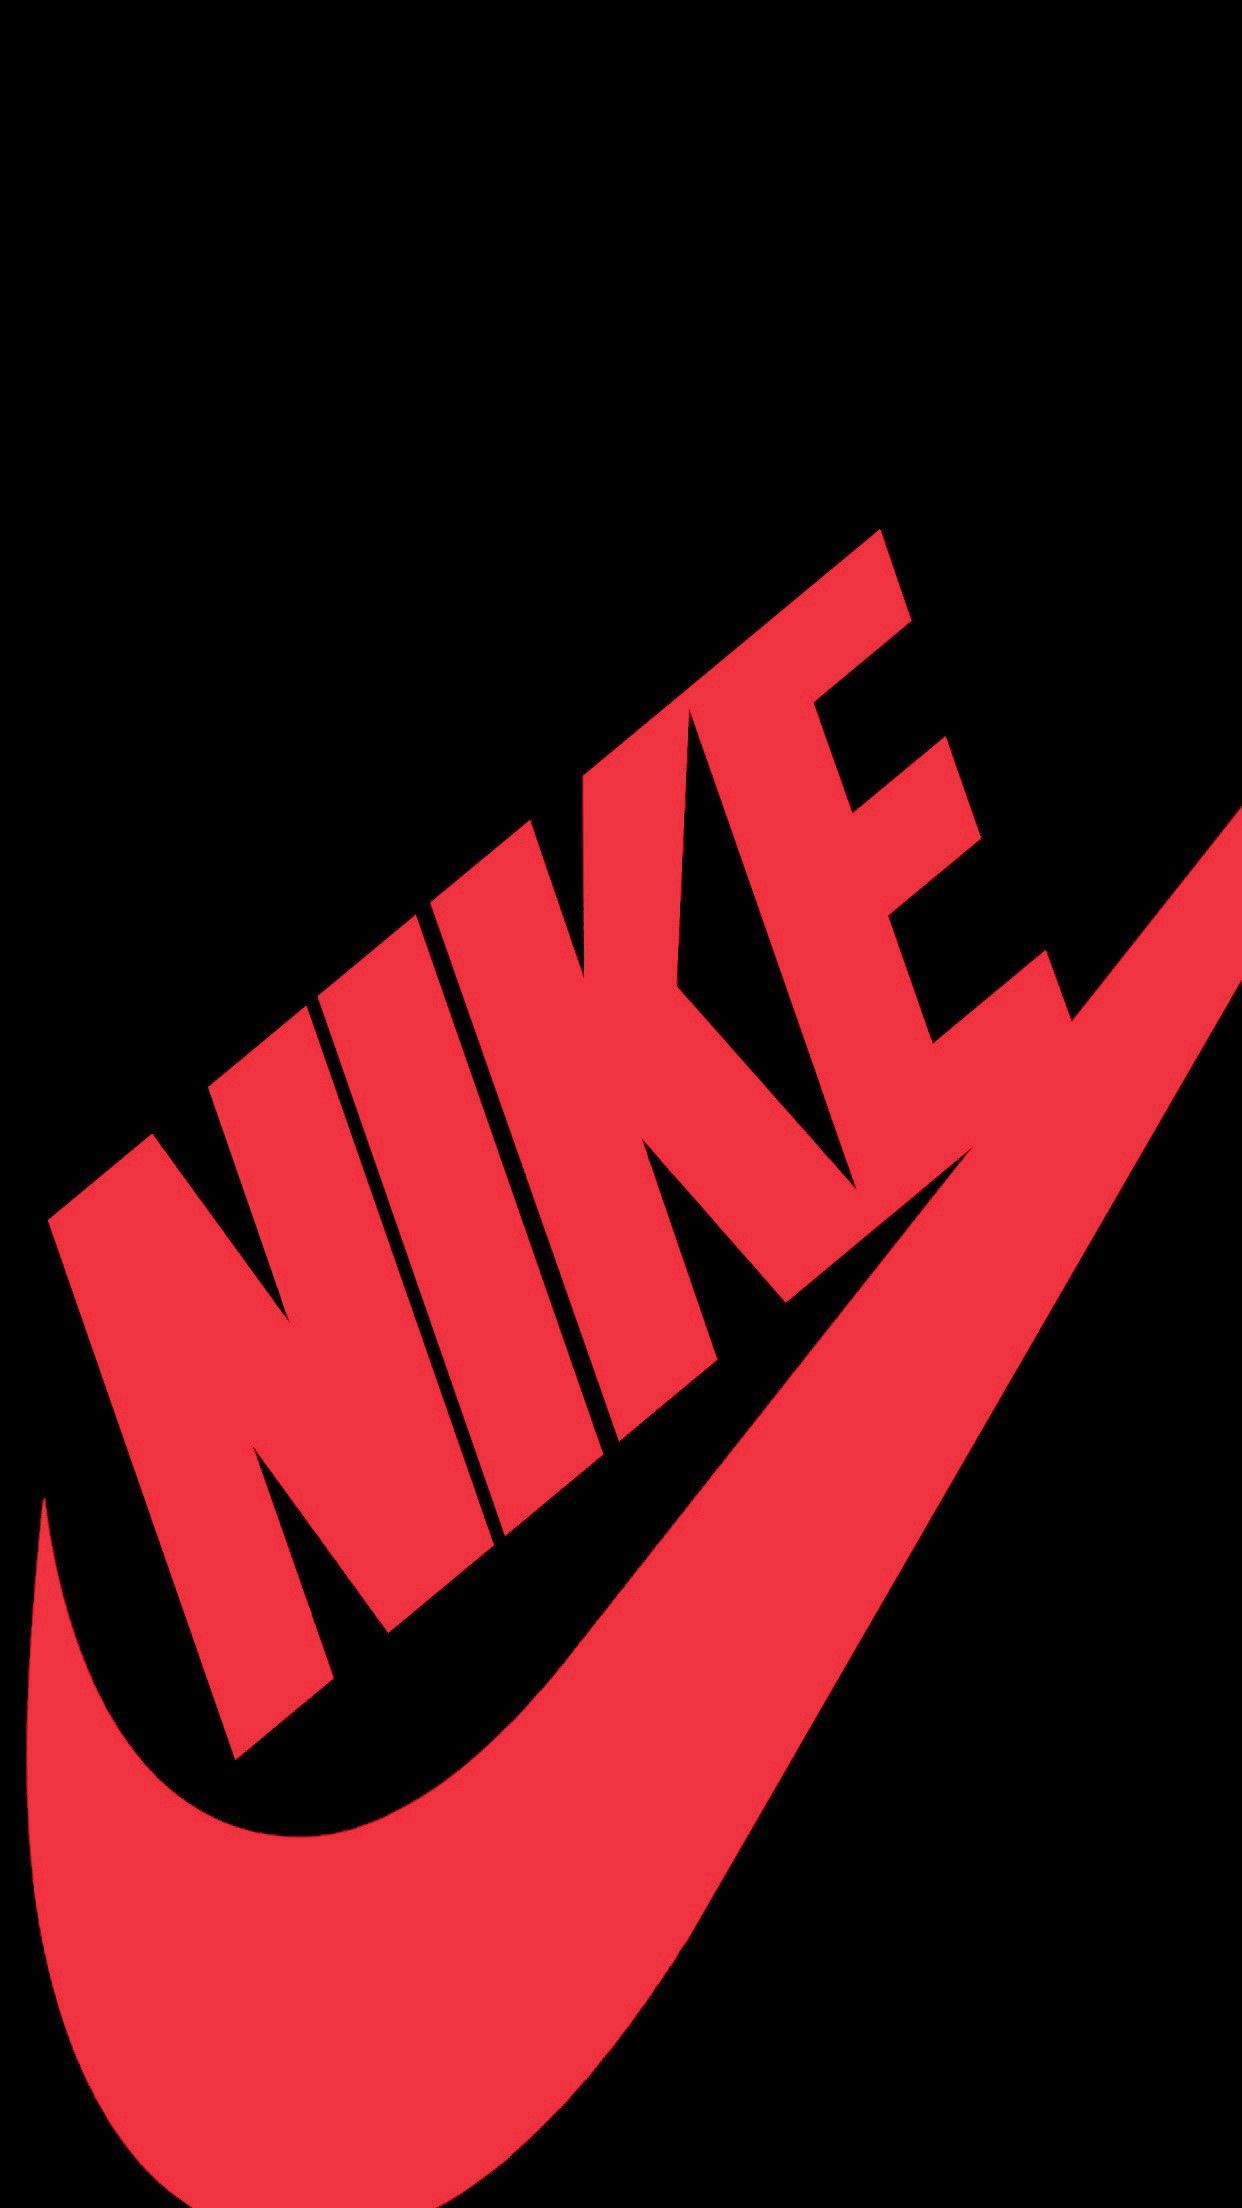 Drippy nike wallpaper.com. Nike logo wallpaper, Nike wallpaper, Nike wallpaper iphone